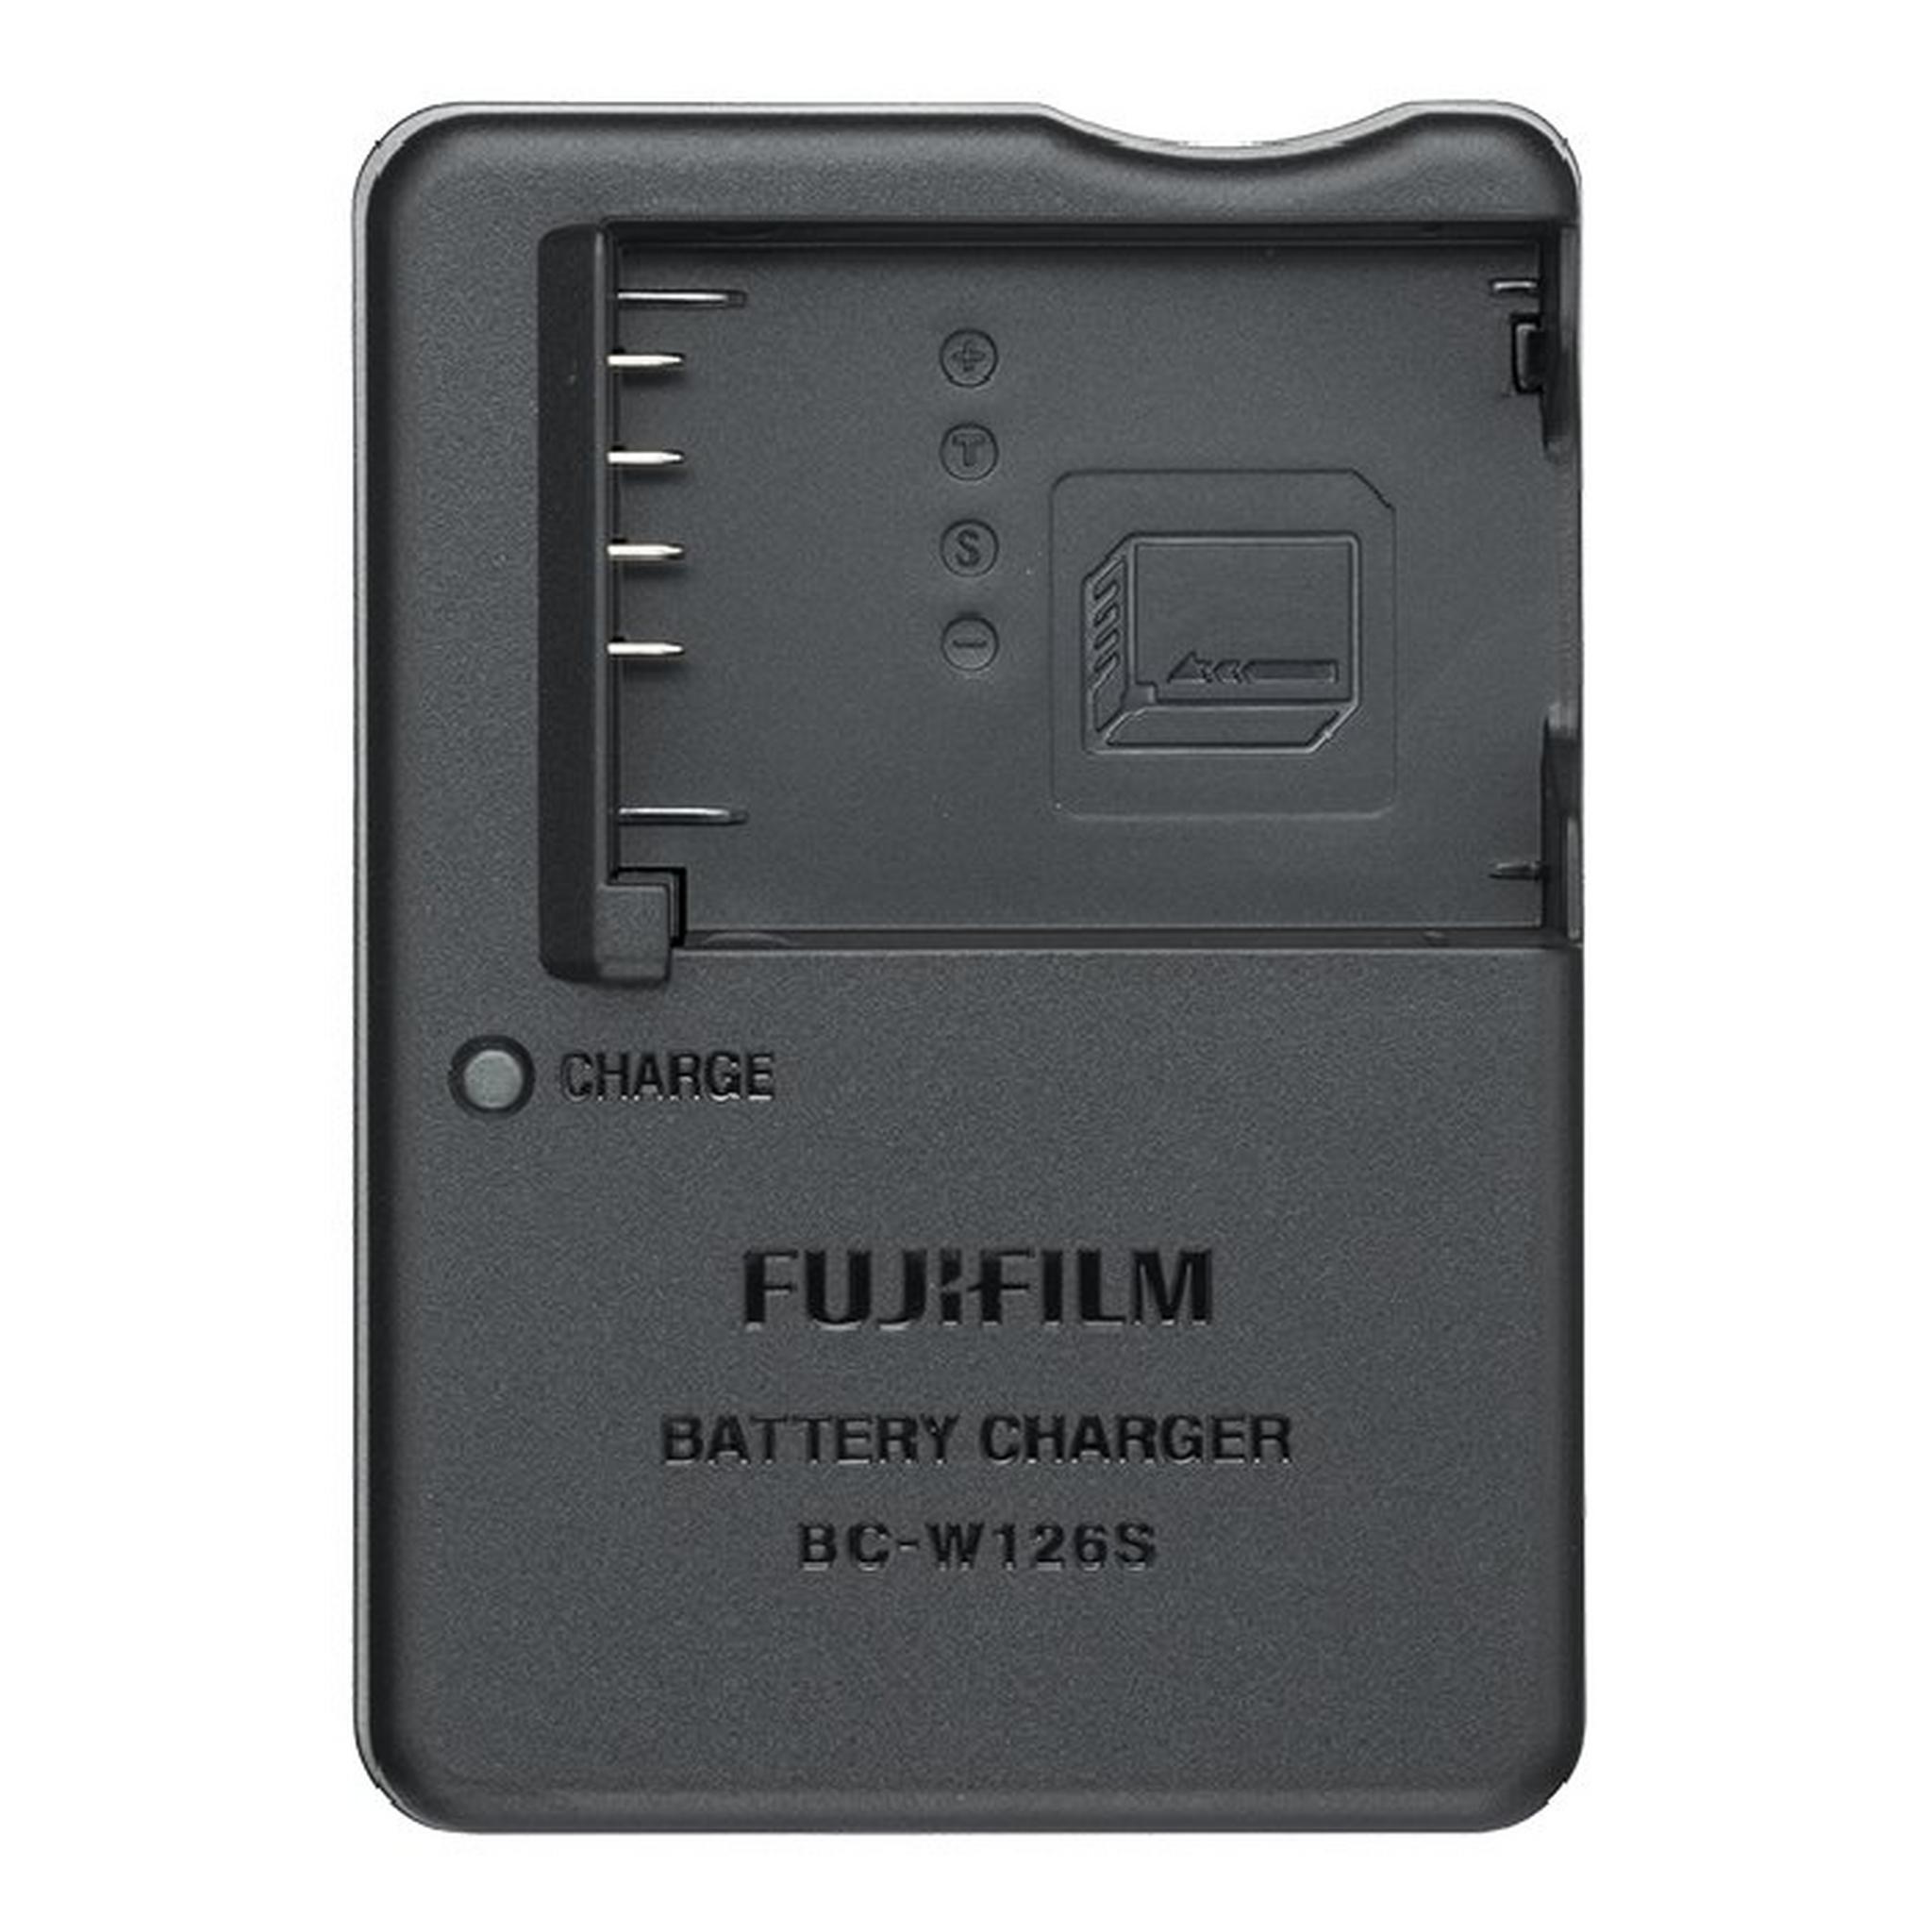 Fuji BC-W126 Battery Charger